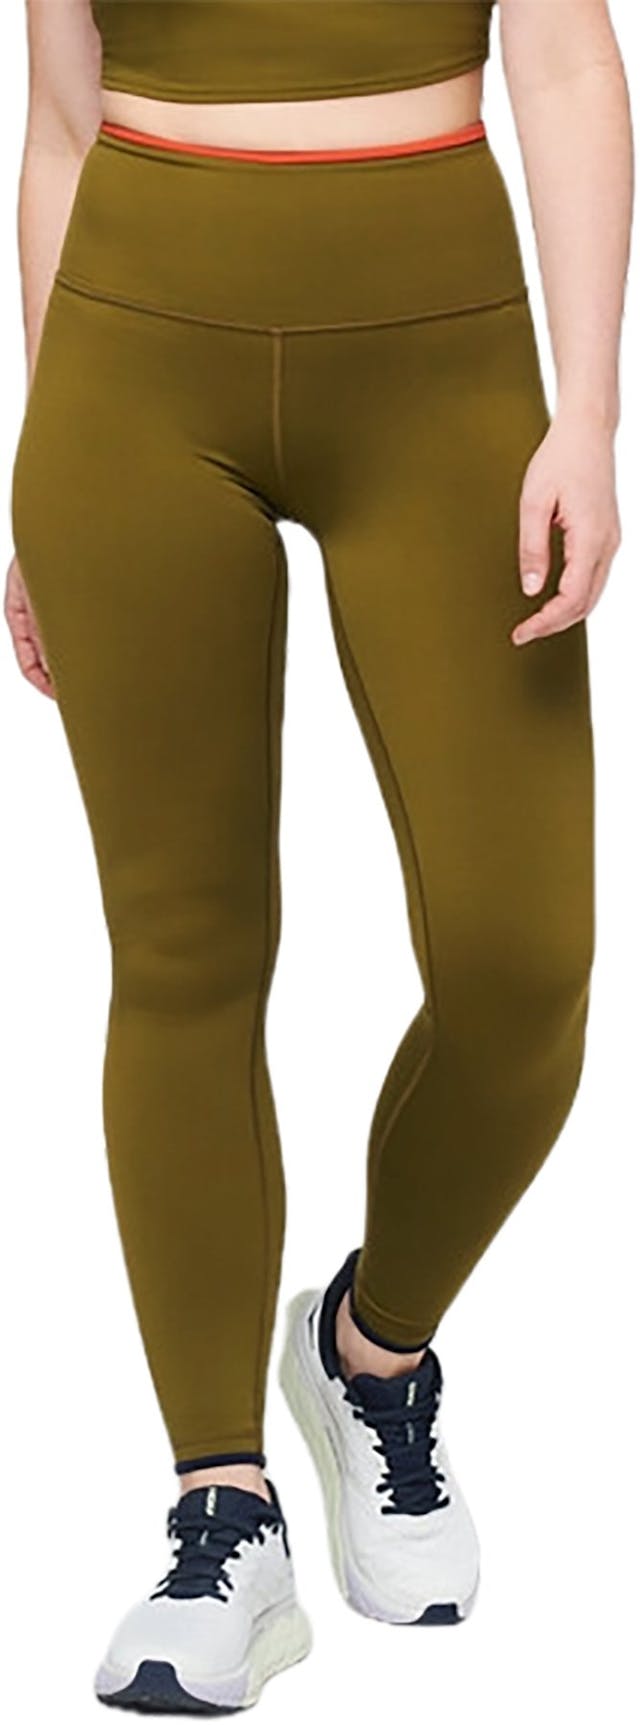 Product image for Mari Legging - Women's